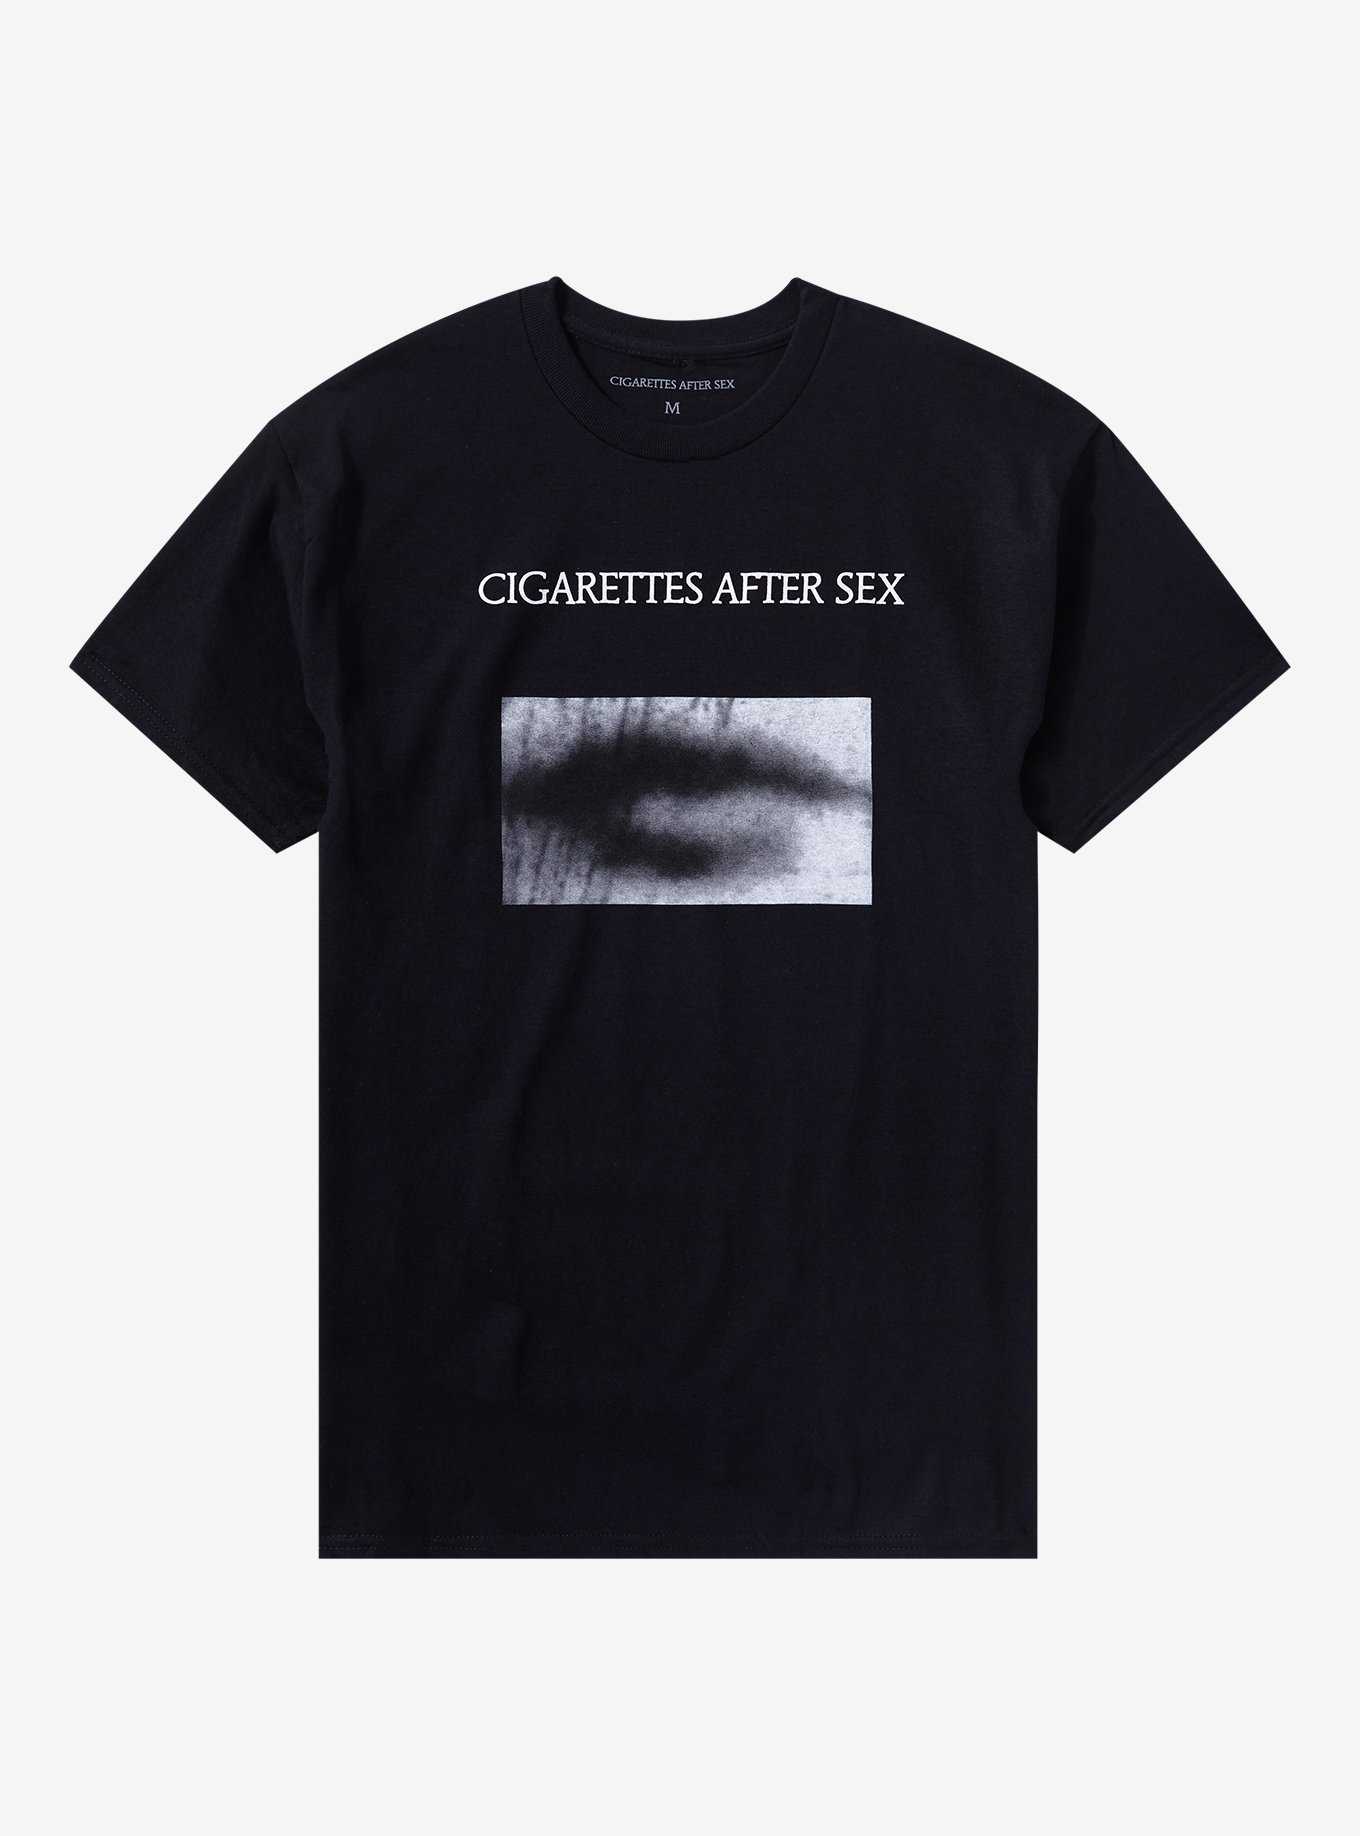 Cigarettes After Sex Black & White Lips Photo T-Shirt, , hi-res